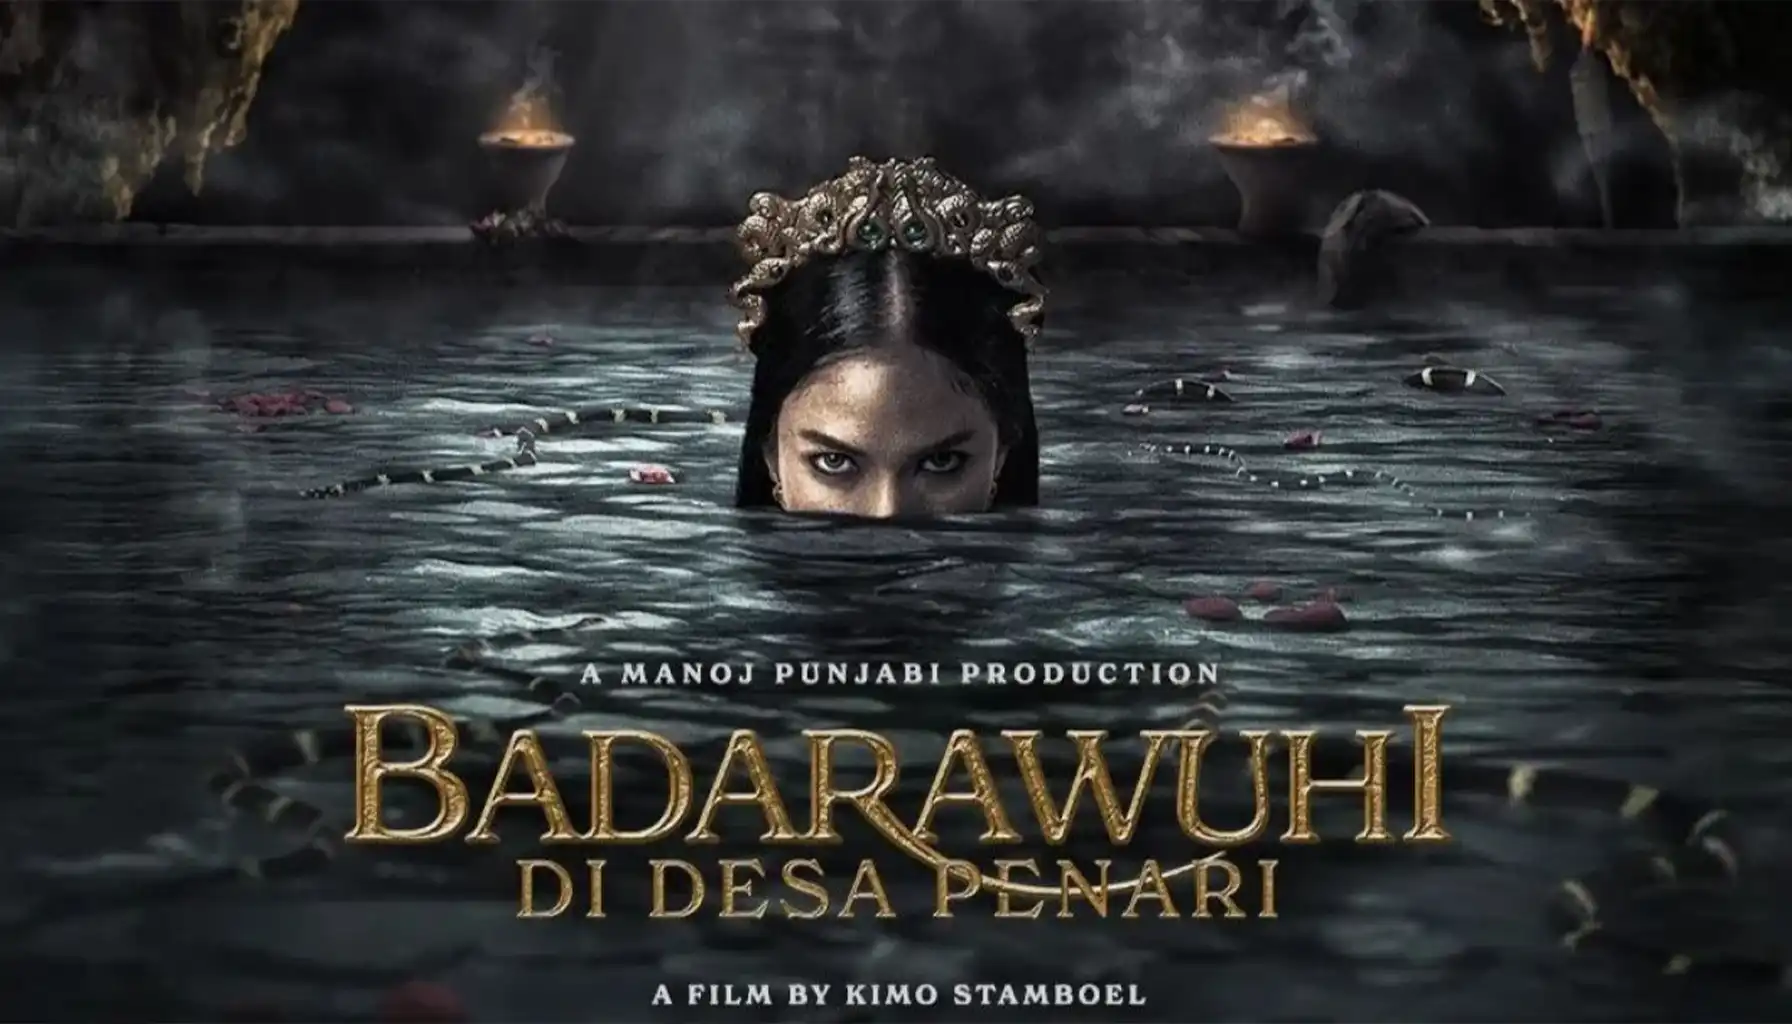 Film Badarawuhi di Desa Penari sukses besar, tarik 1 juta penonton dalam libur Lebaran dengan kurun waktu 3 hari.